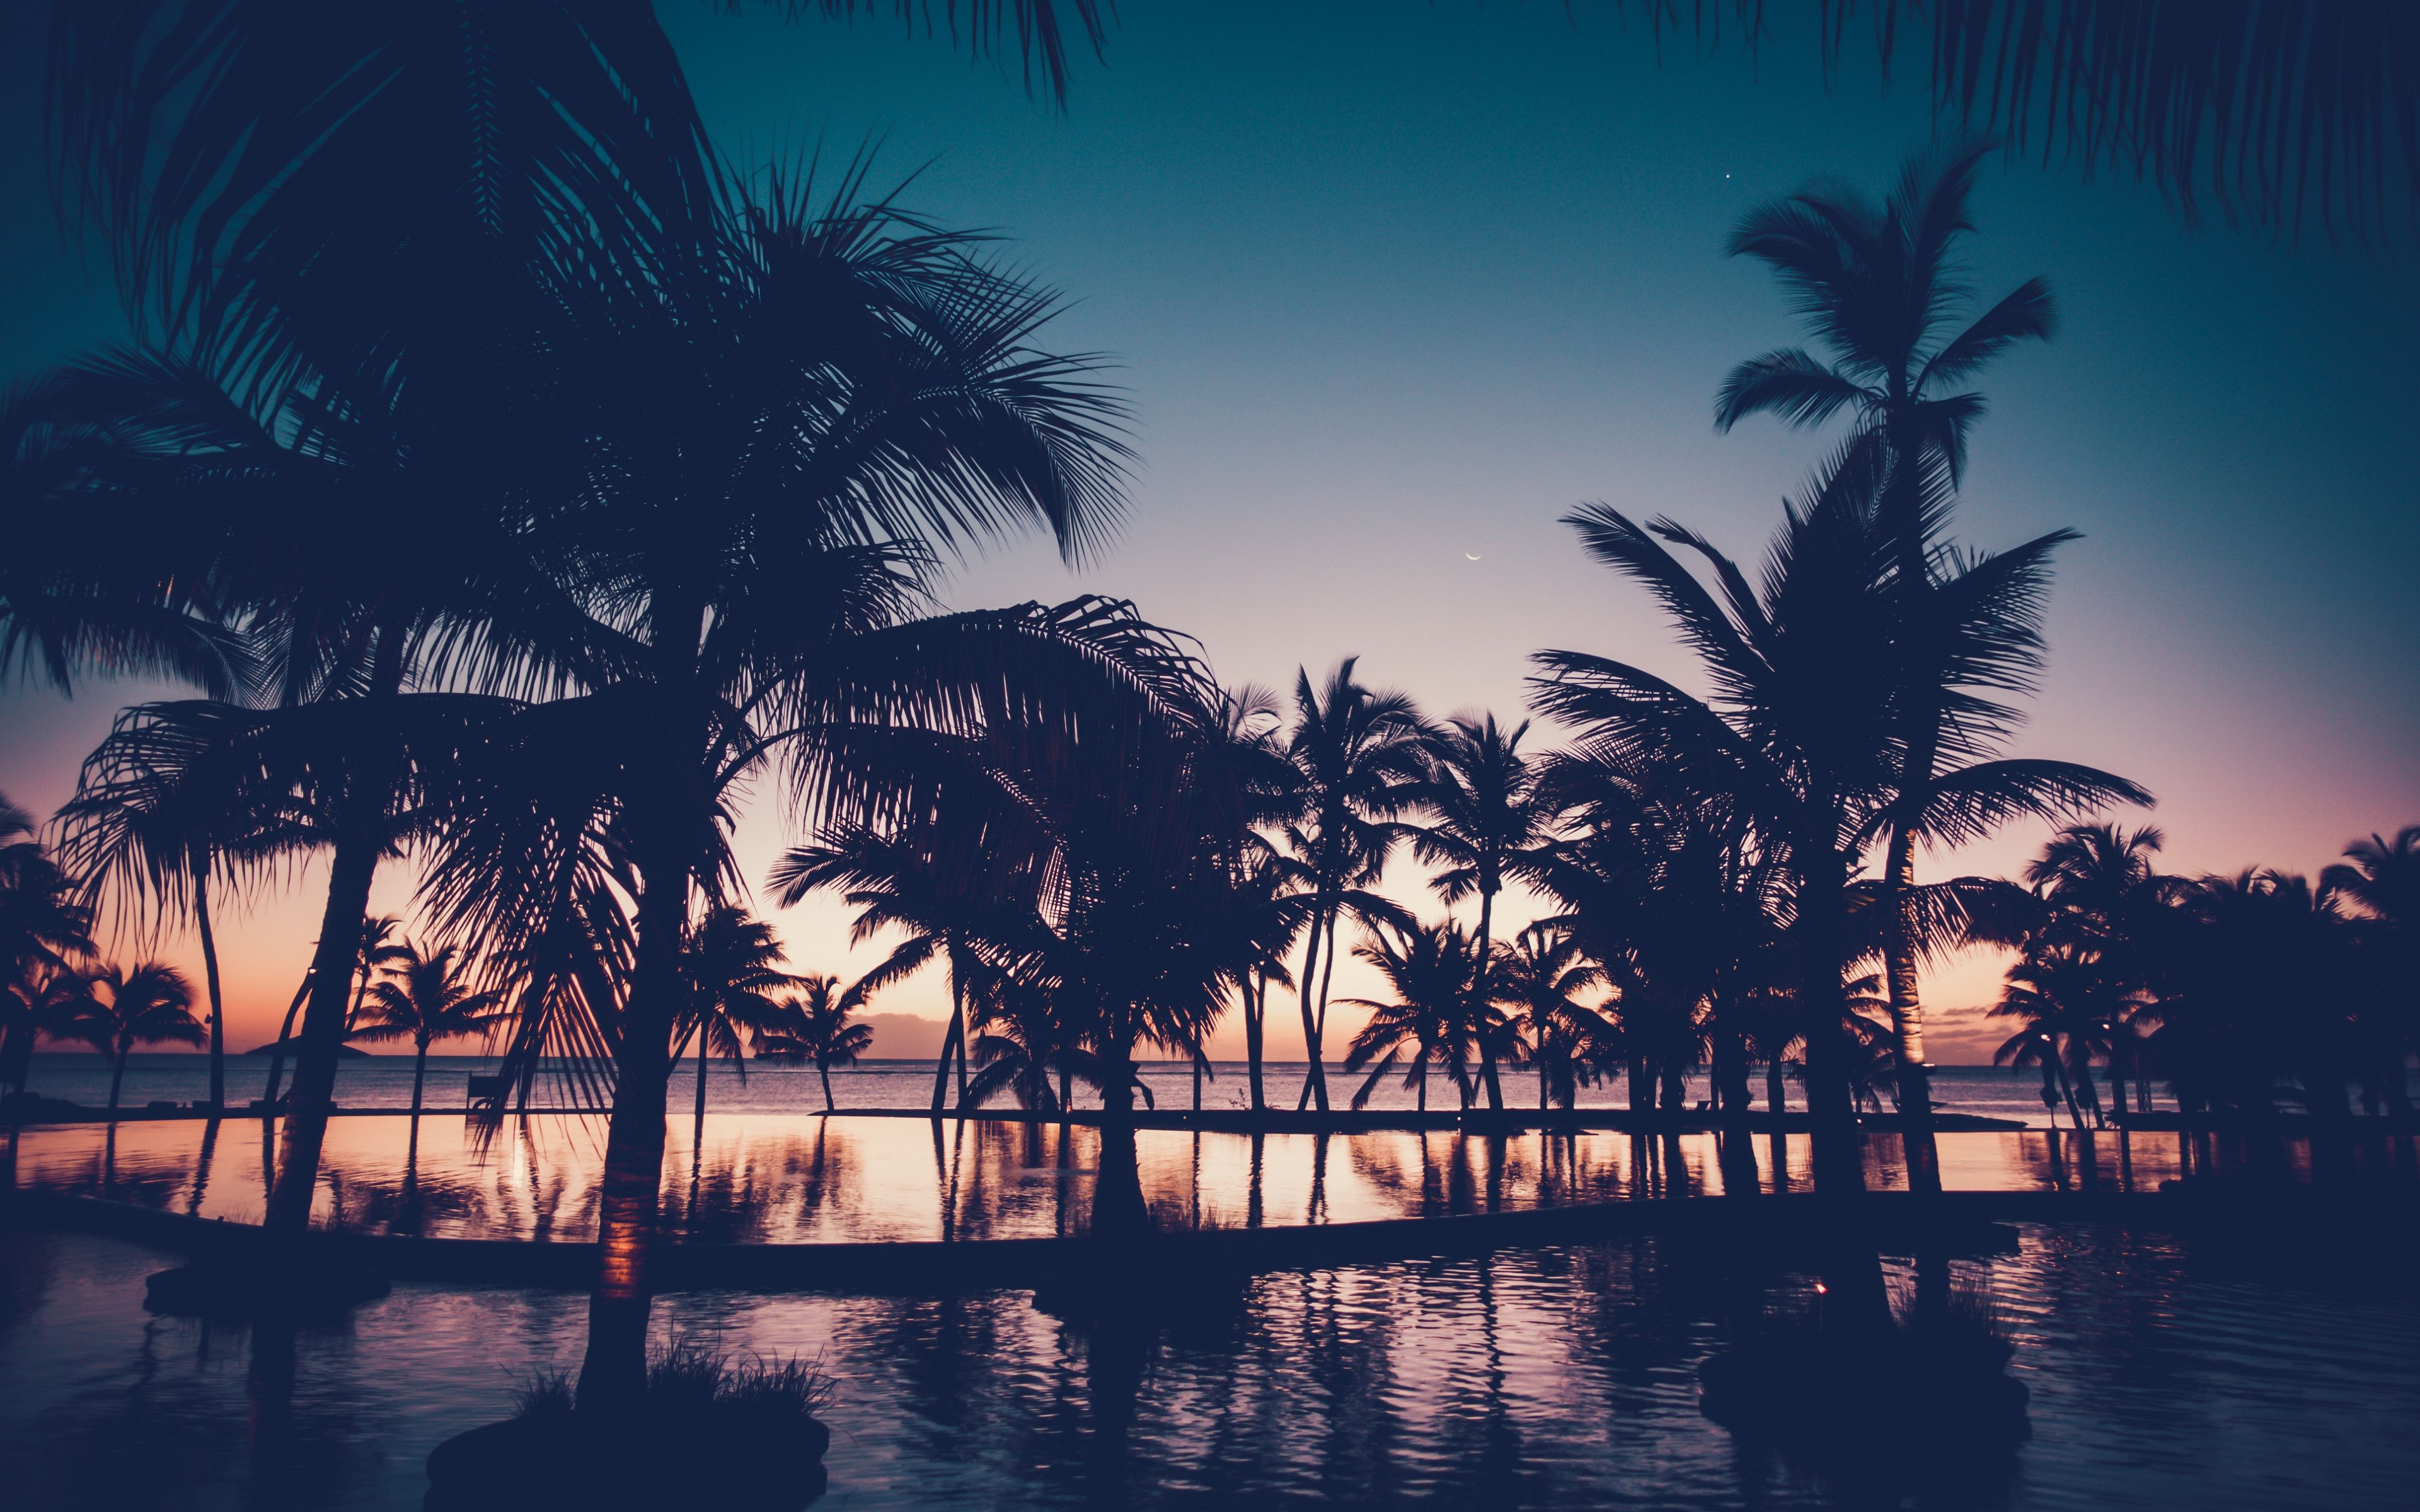 Download Dawn, dark, sunset, palm tree, resort, reflections wallpaper, 3840x 4K Ultra HD 16: Widescreen